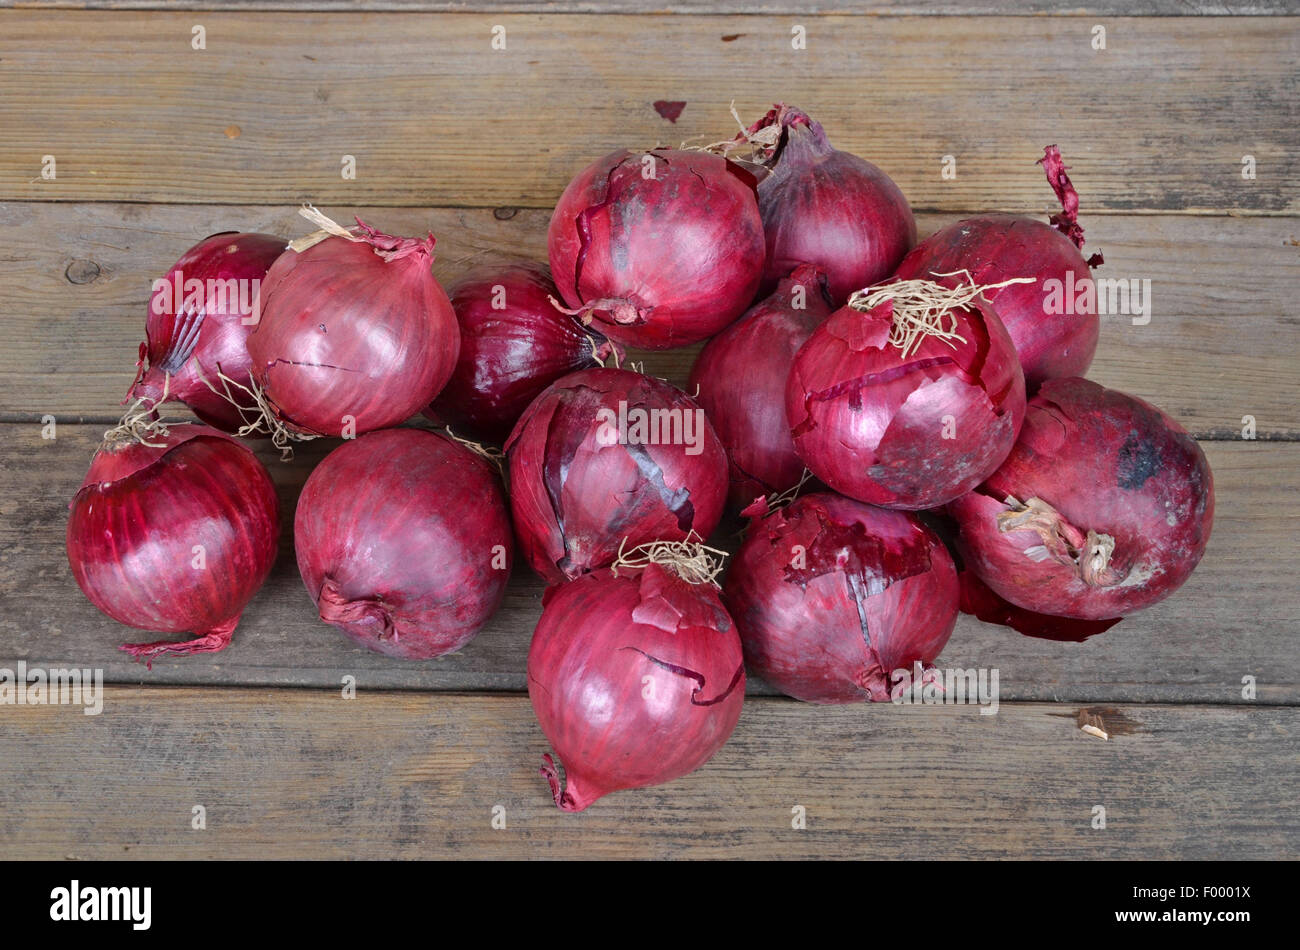 Jardin oignon, oignon, bulbe oignon commun (Allium cepa), oignons rouges Banque D'Images